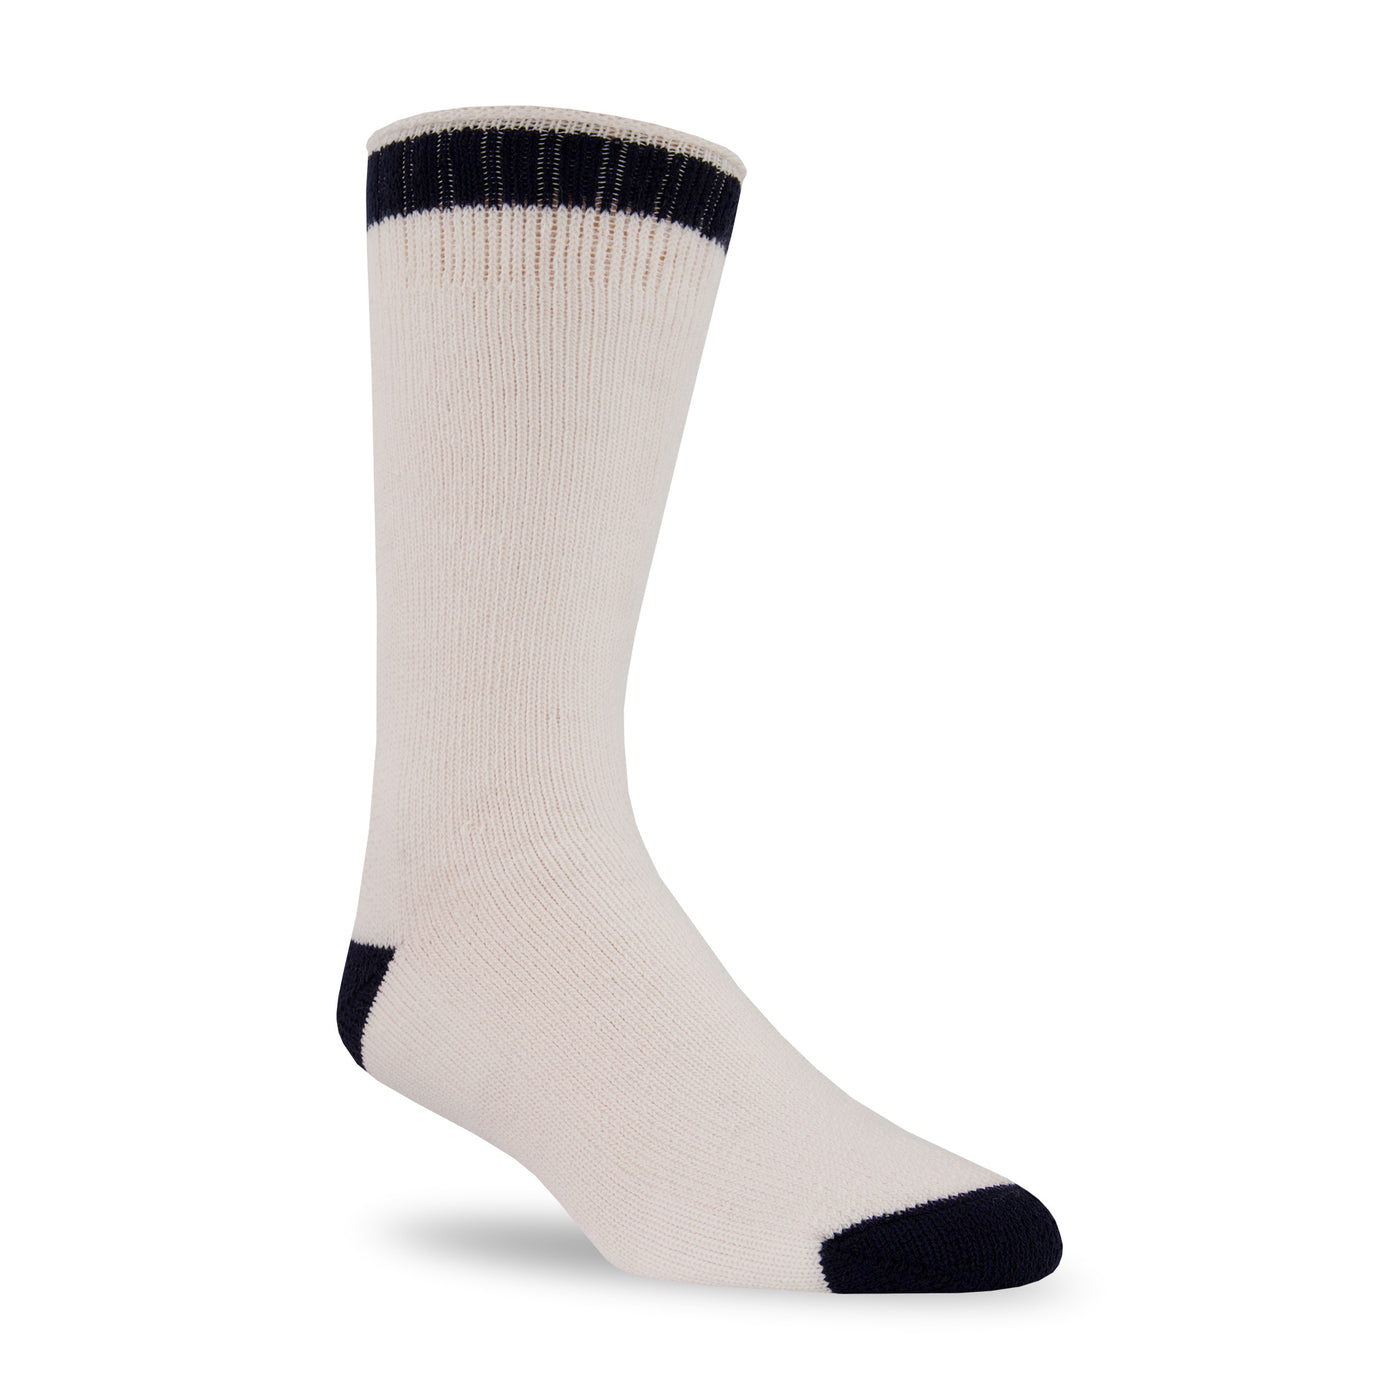 White/Black Acrylic Thermal Boot Socks 